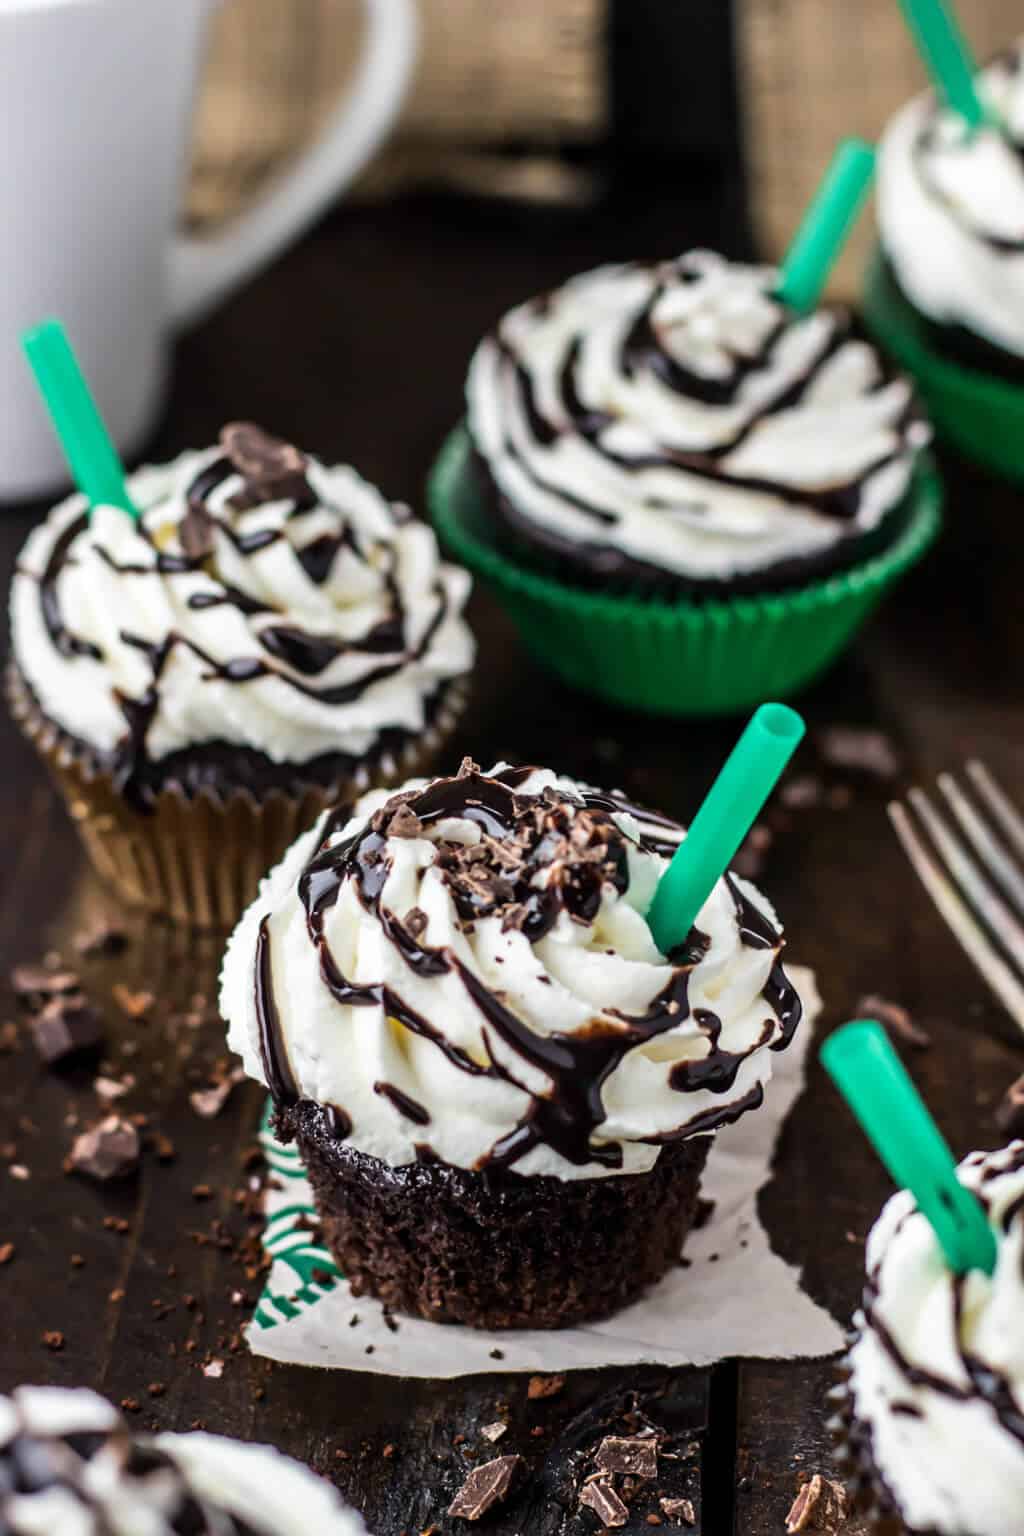 Starbucks-Inspired Cupcakes: Sip and Savor